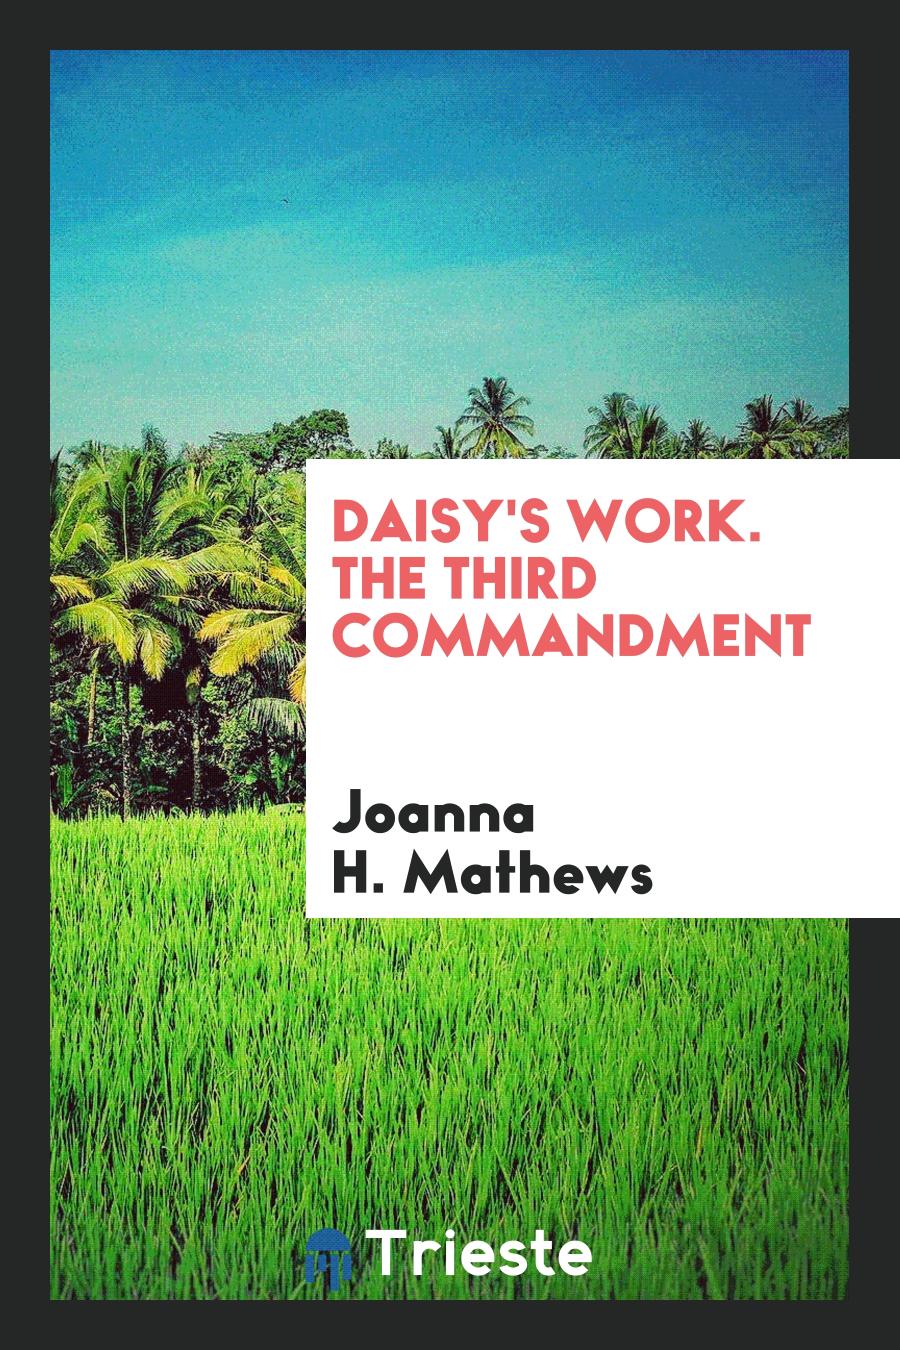 Daisy's work. The third commandment